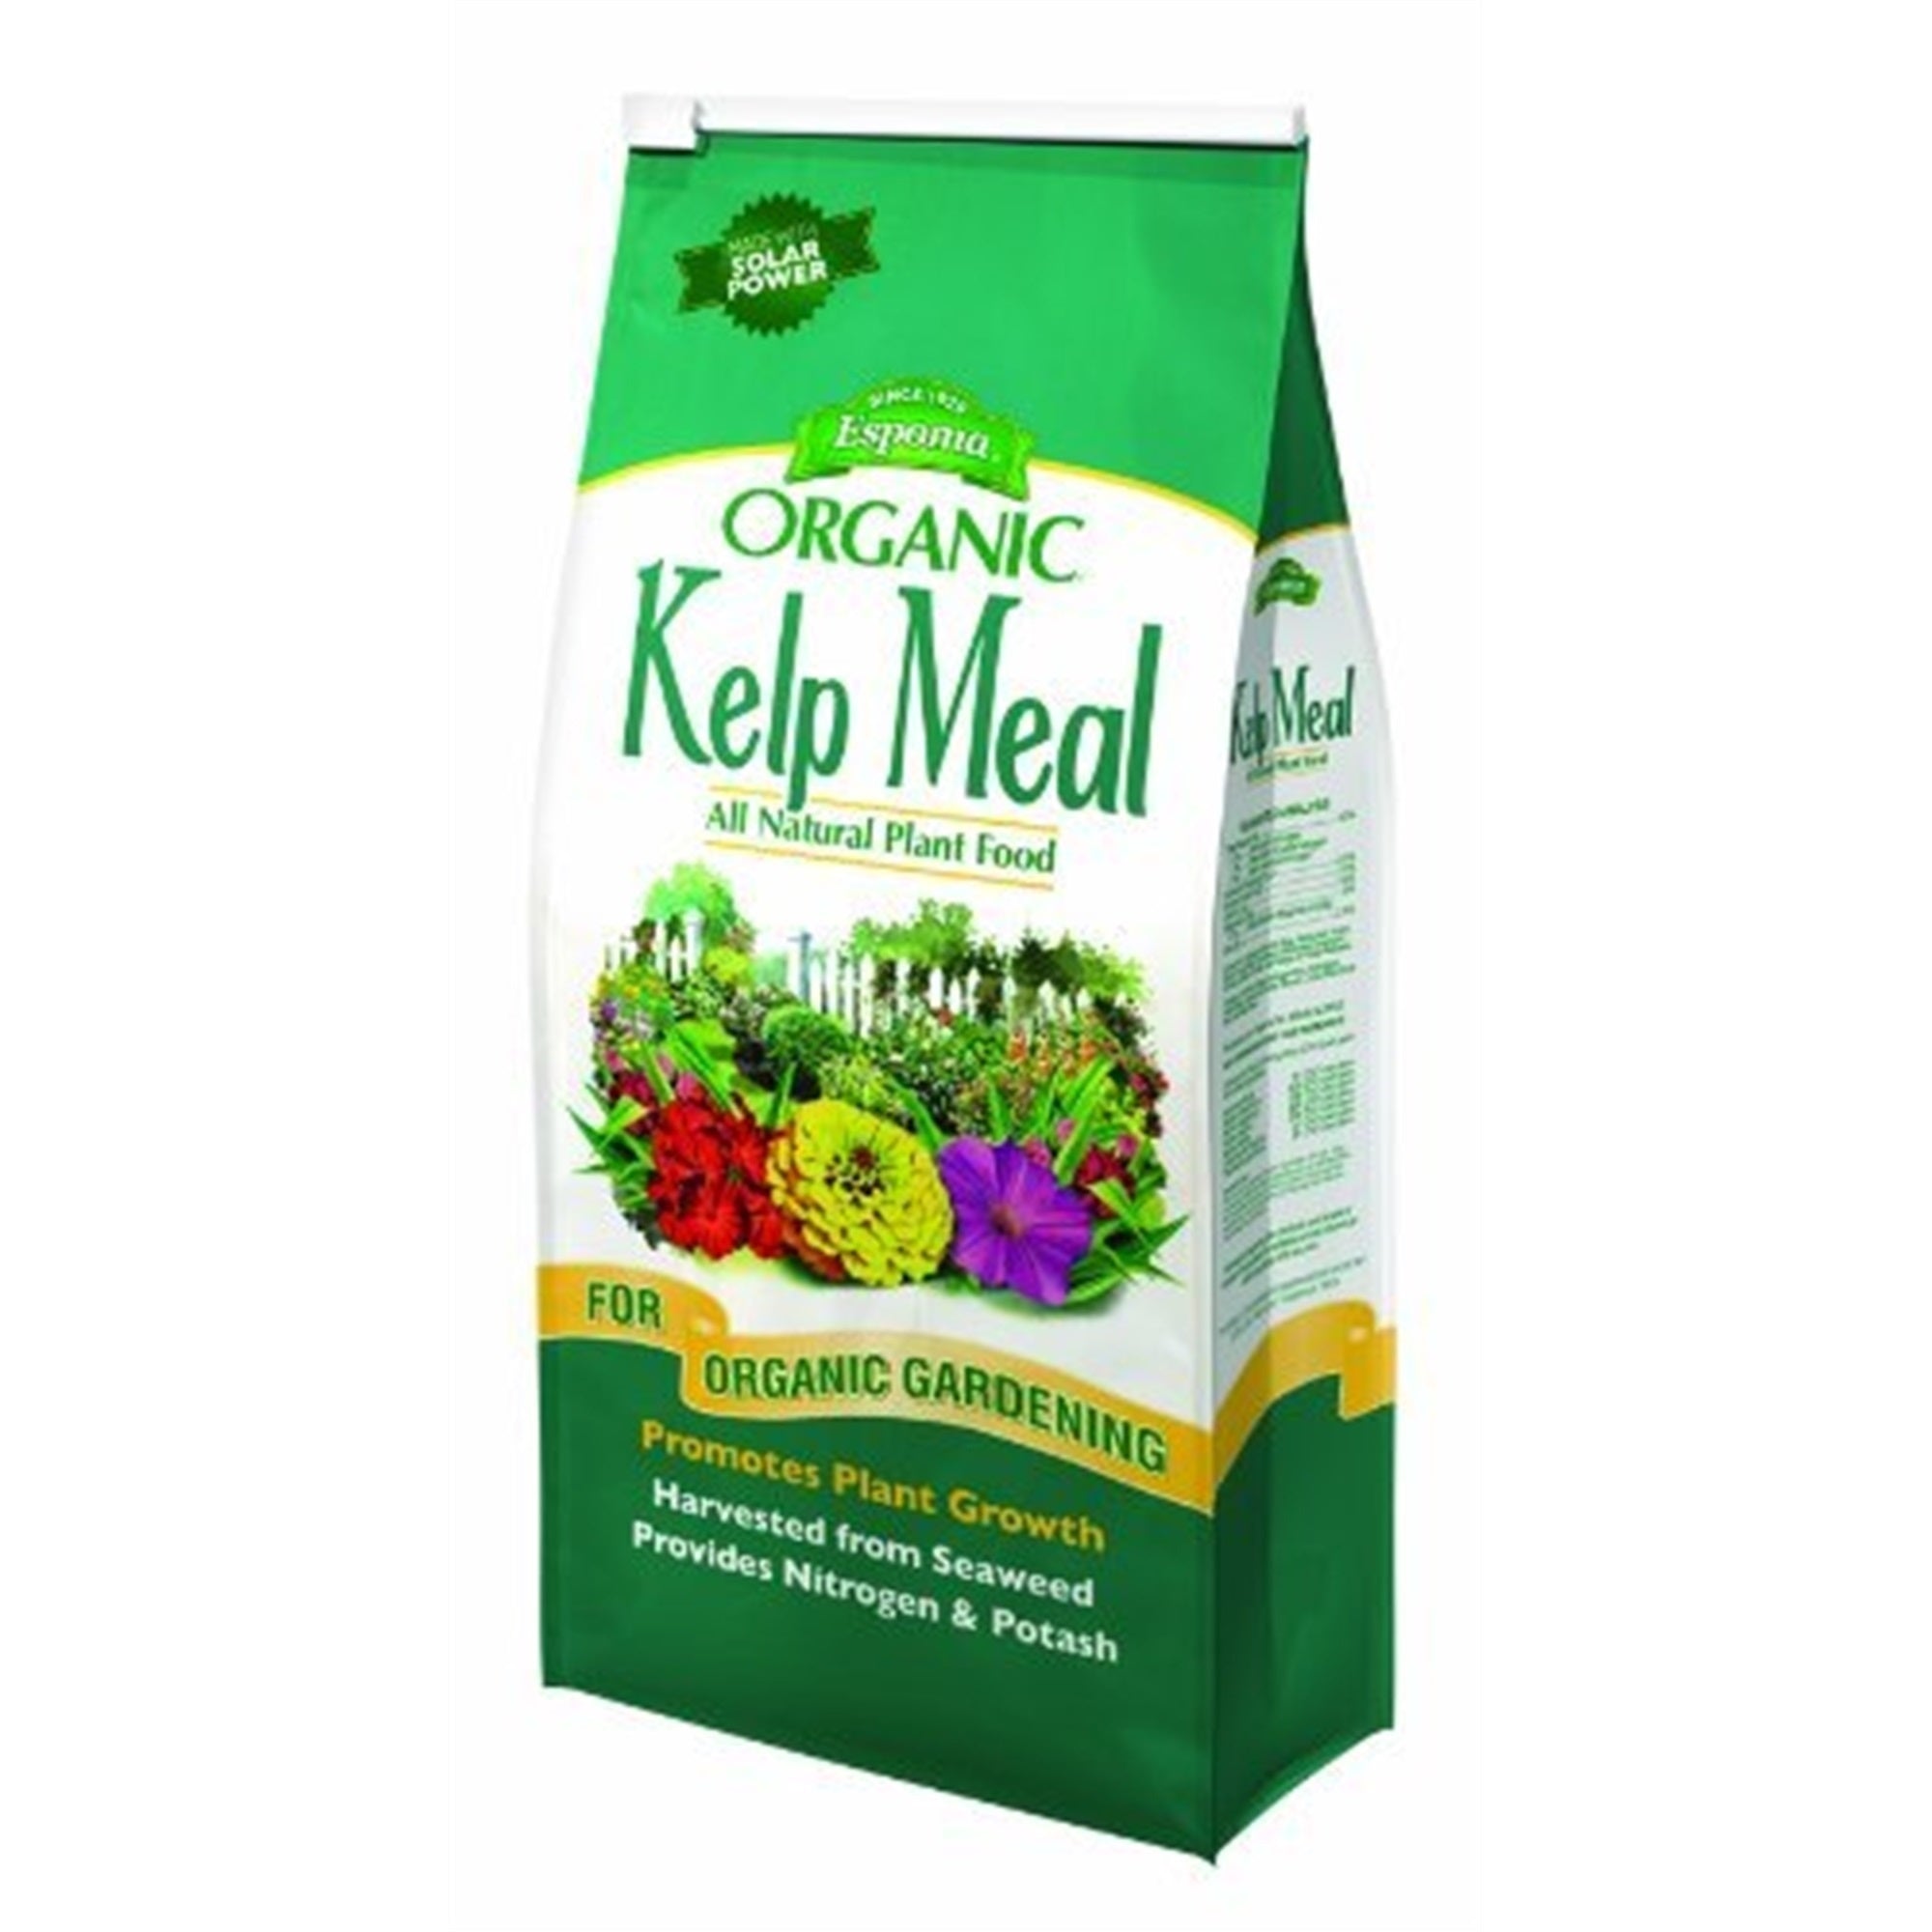 Espoma Organic Kelp Meal 1-0-2 All-Natural Plant Food, Promotes Plant Growth, for Organic Gardening, 4 lb Bag